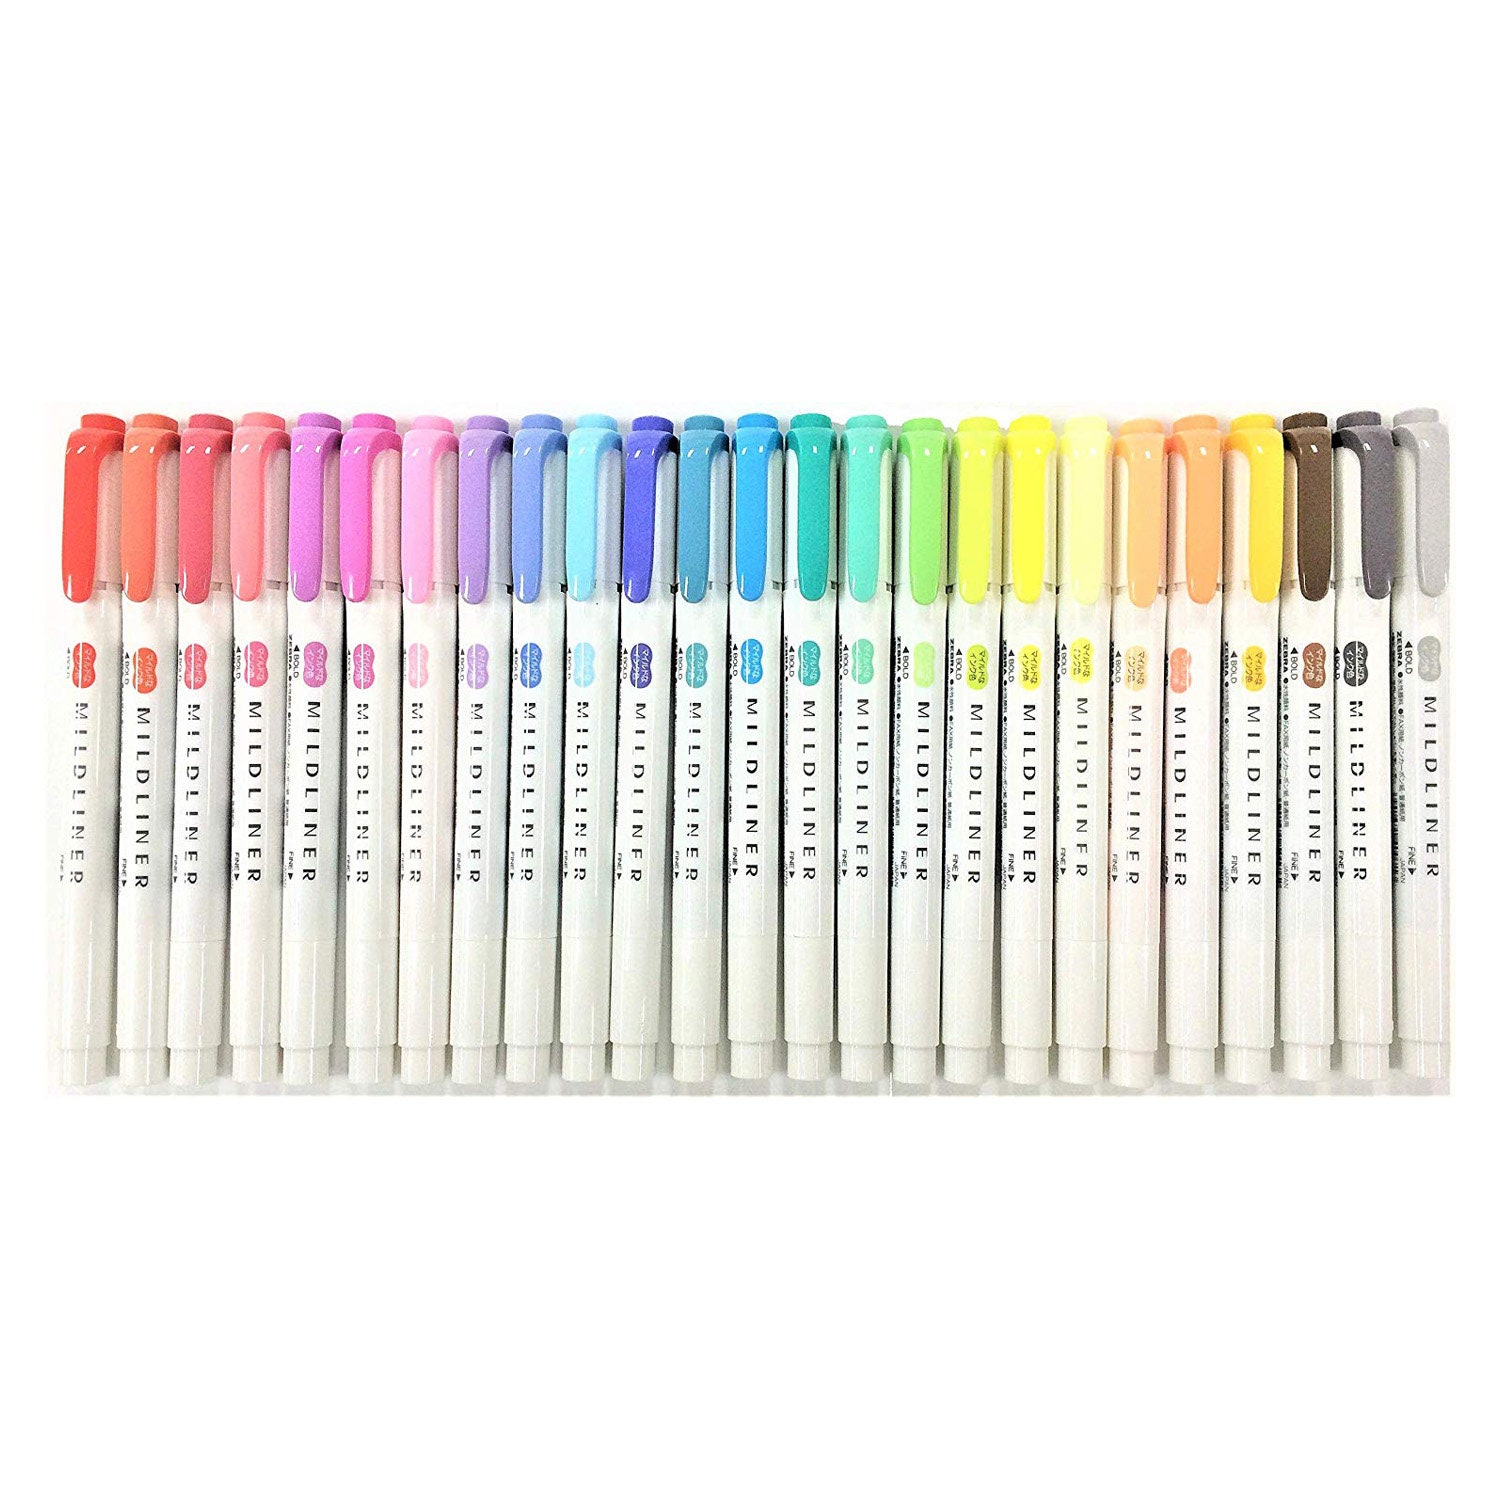 6PCS/set Mini Highlighter Pen Midliners Zebra Color Markers Double